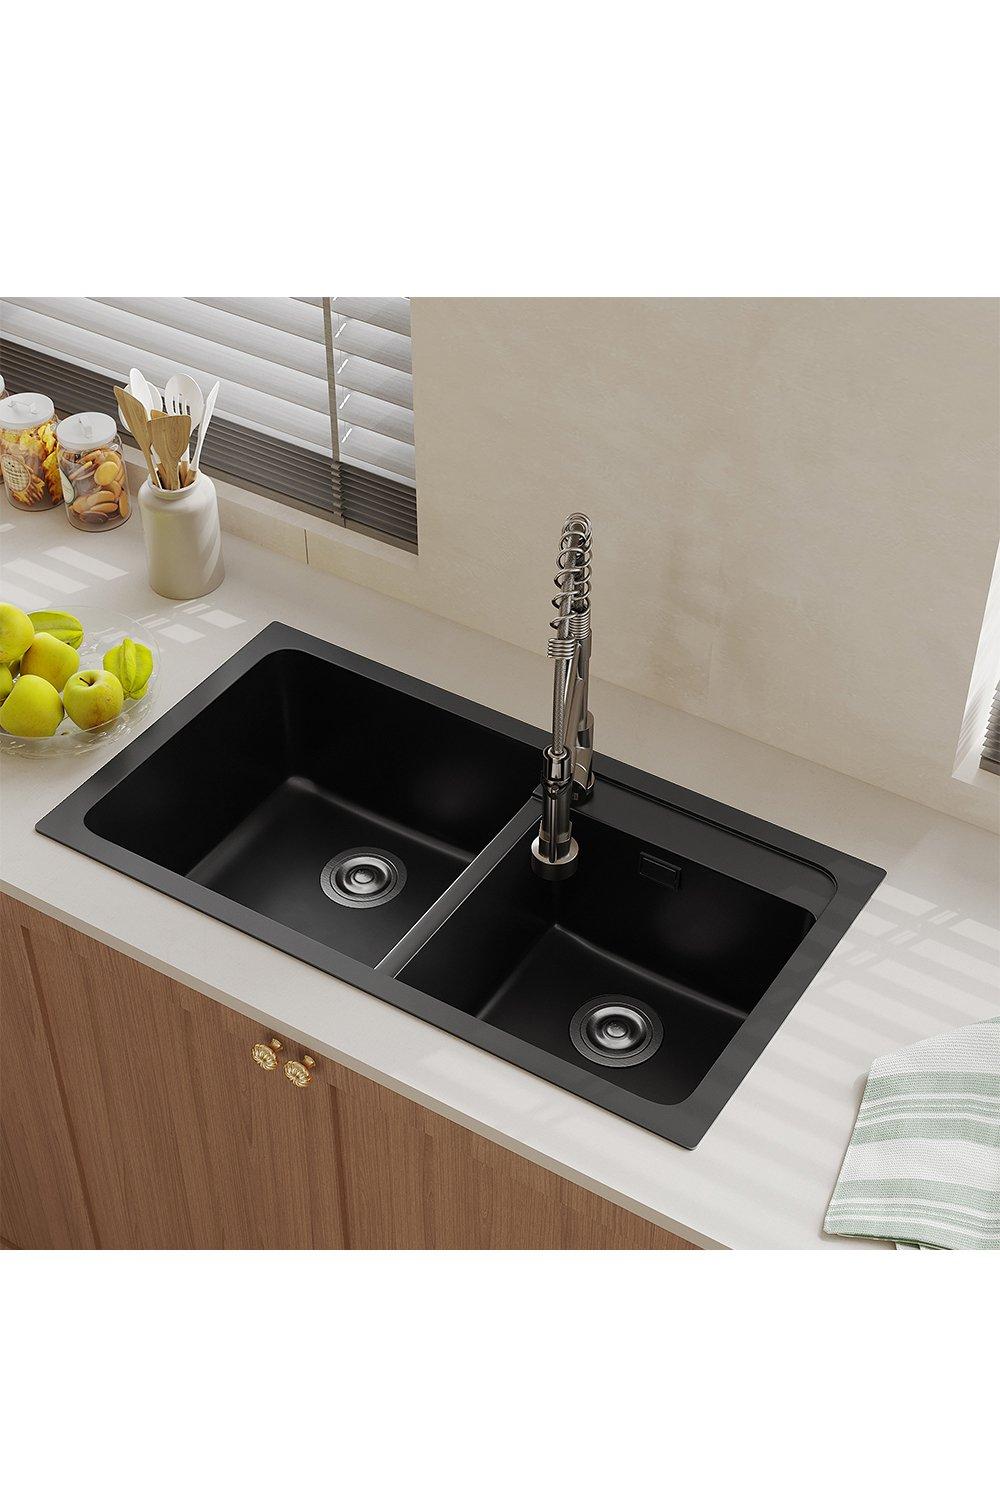 86x46Cm Double Bow lQuartz Undermount Kitchen Sink